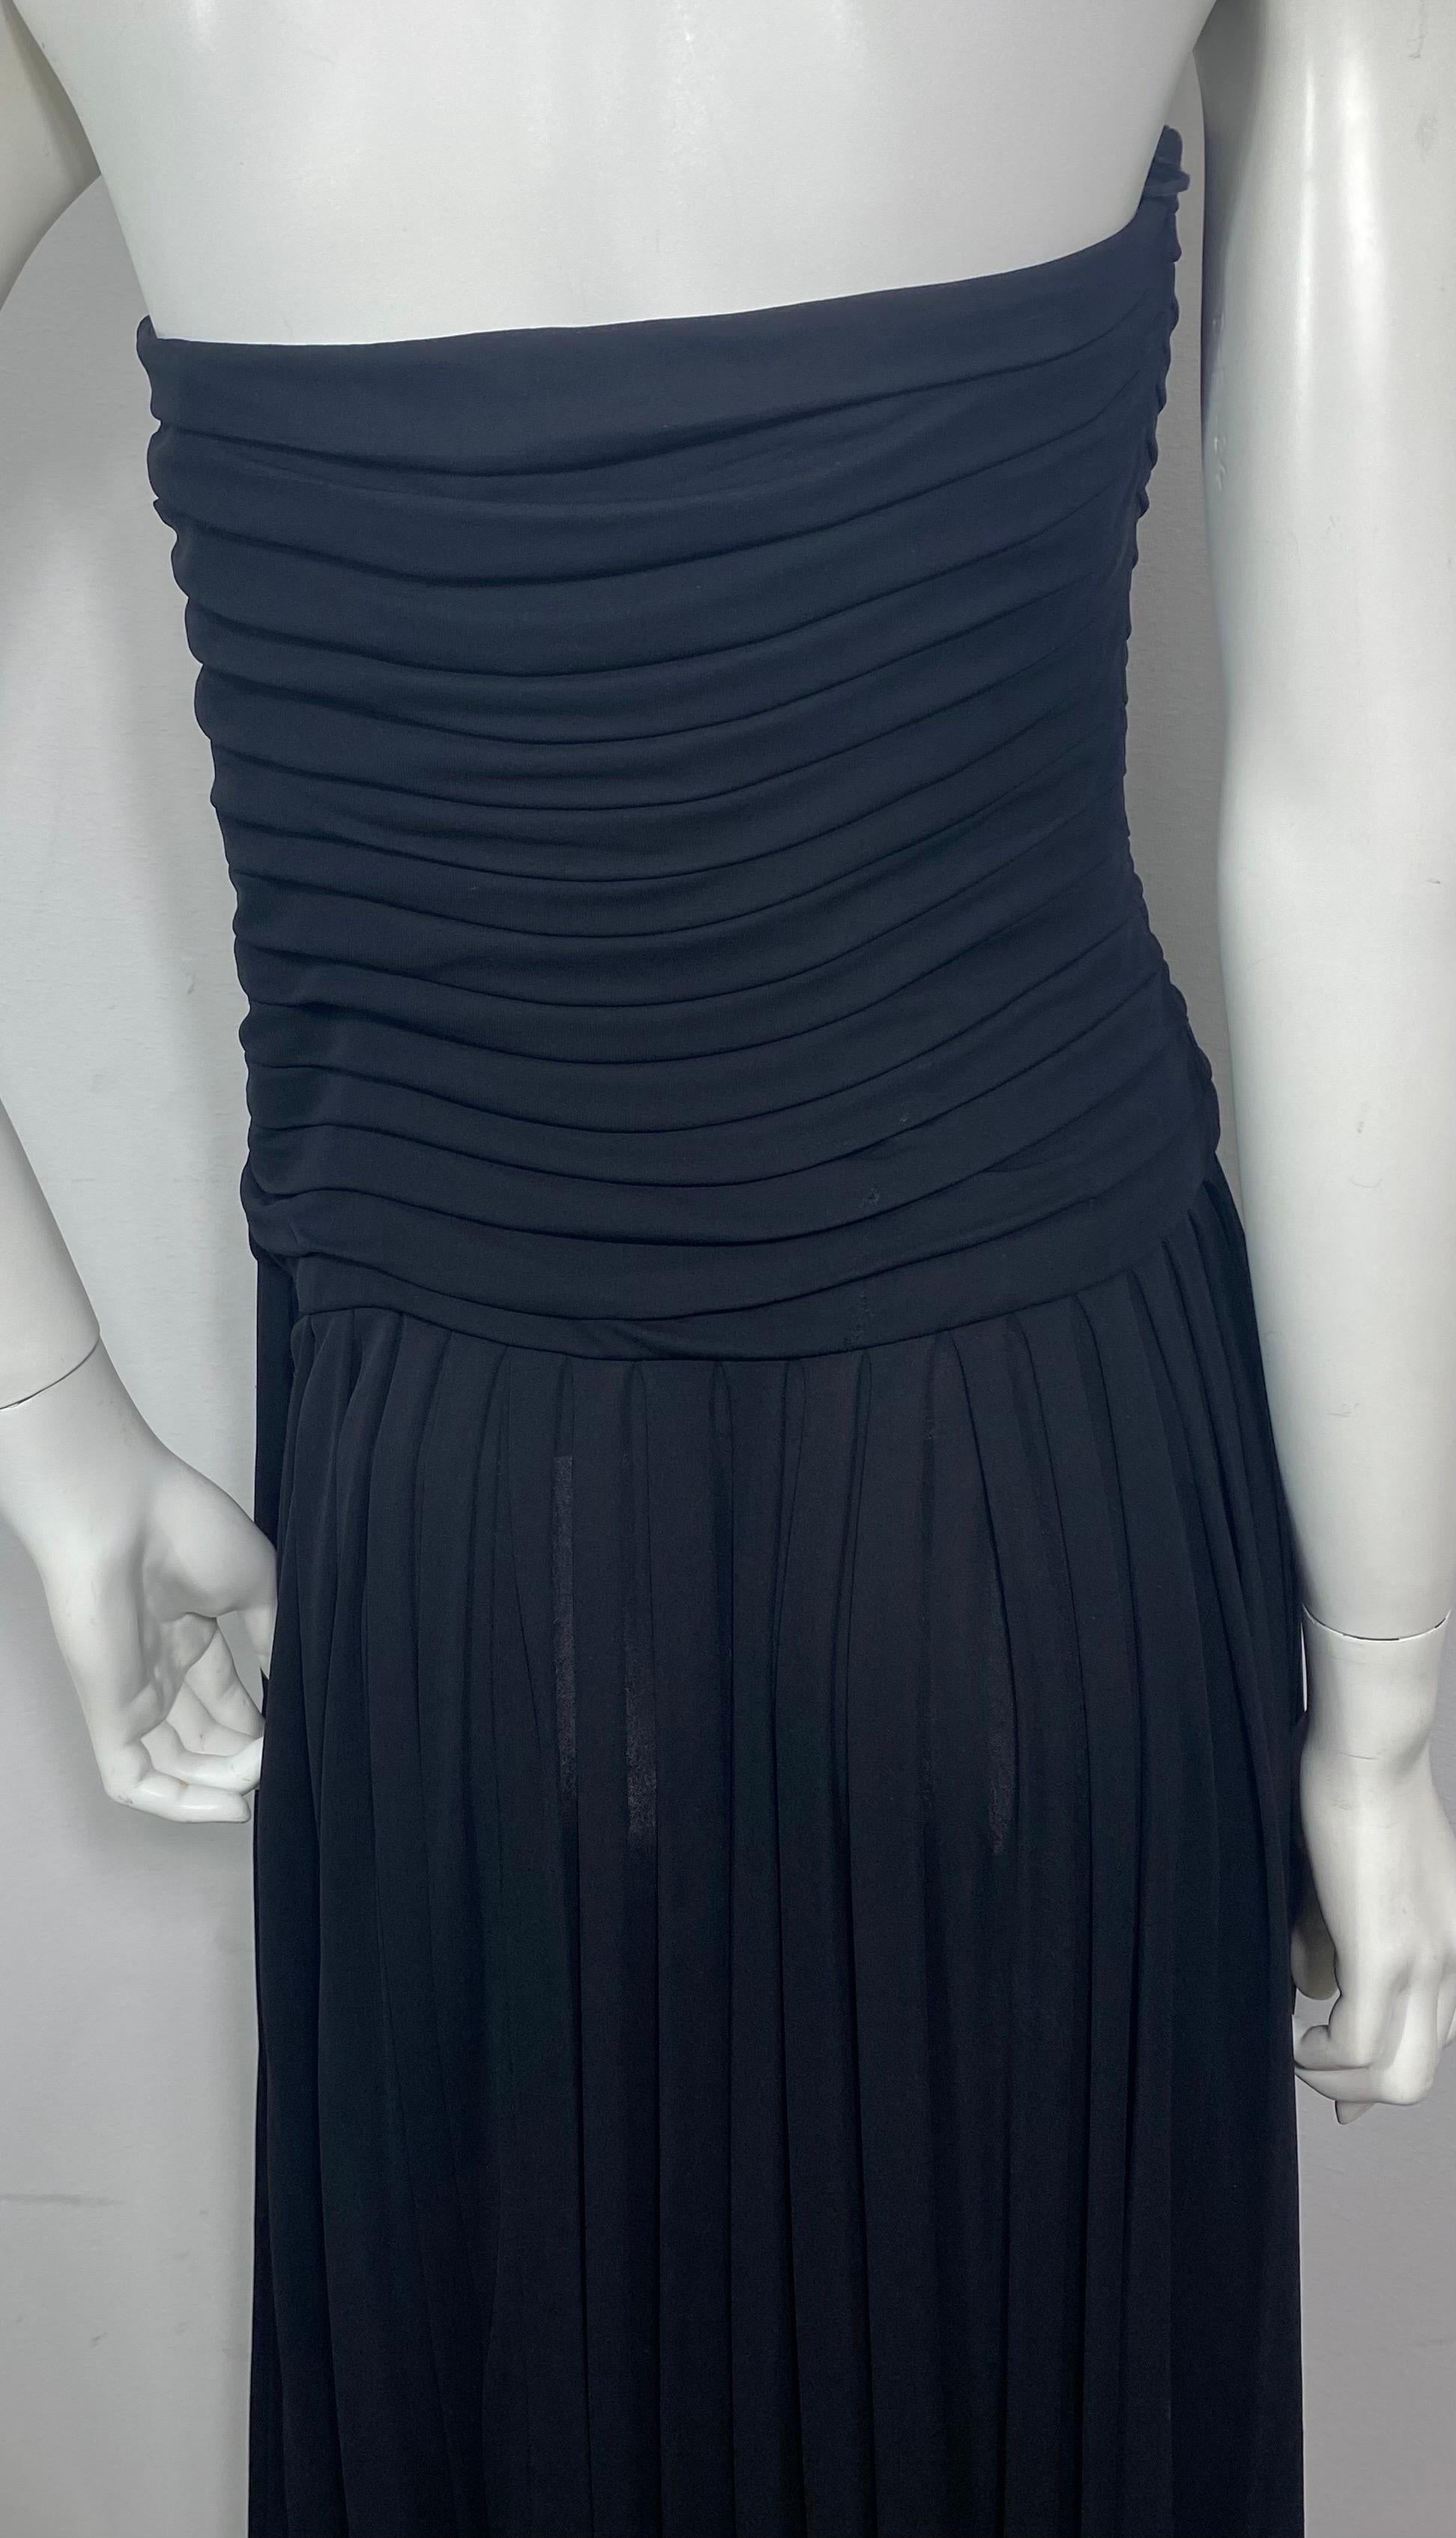 Lanvin 1970’s Black Shutter Pleat Matte Jersey Strapless Long Dress-Size 40 For Sale 5